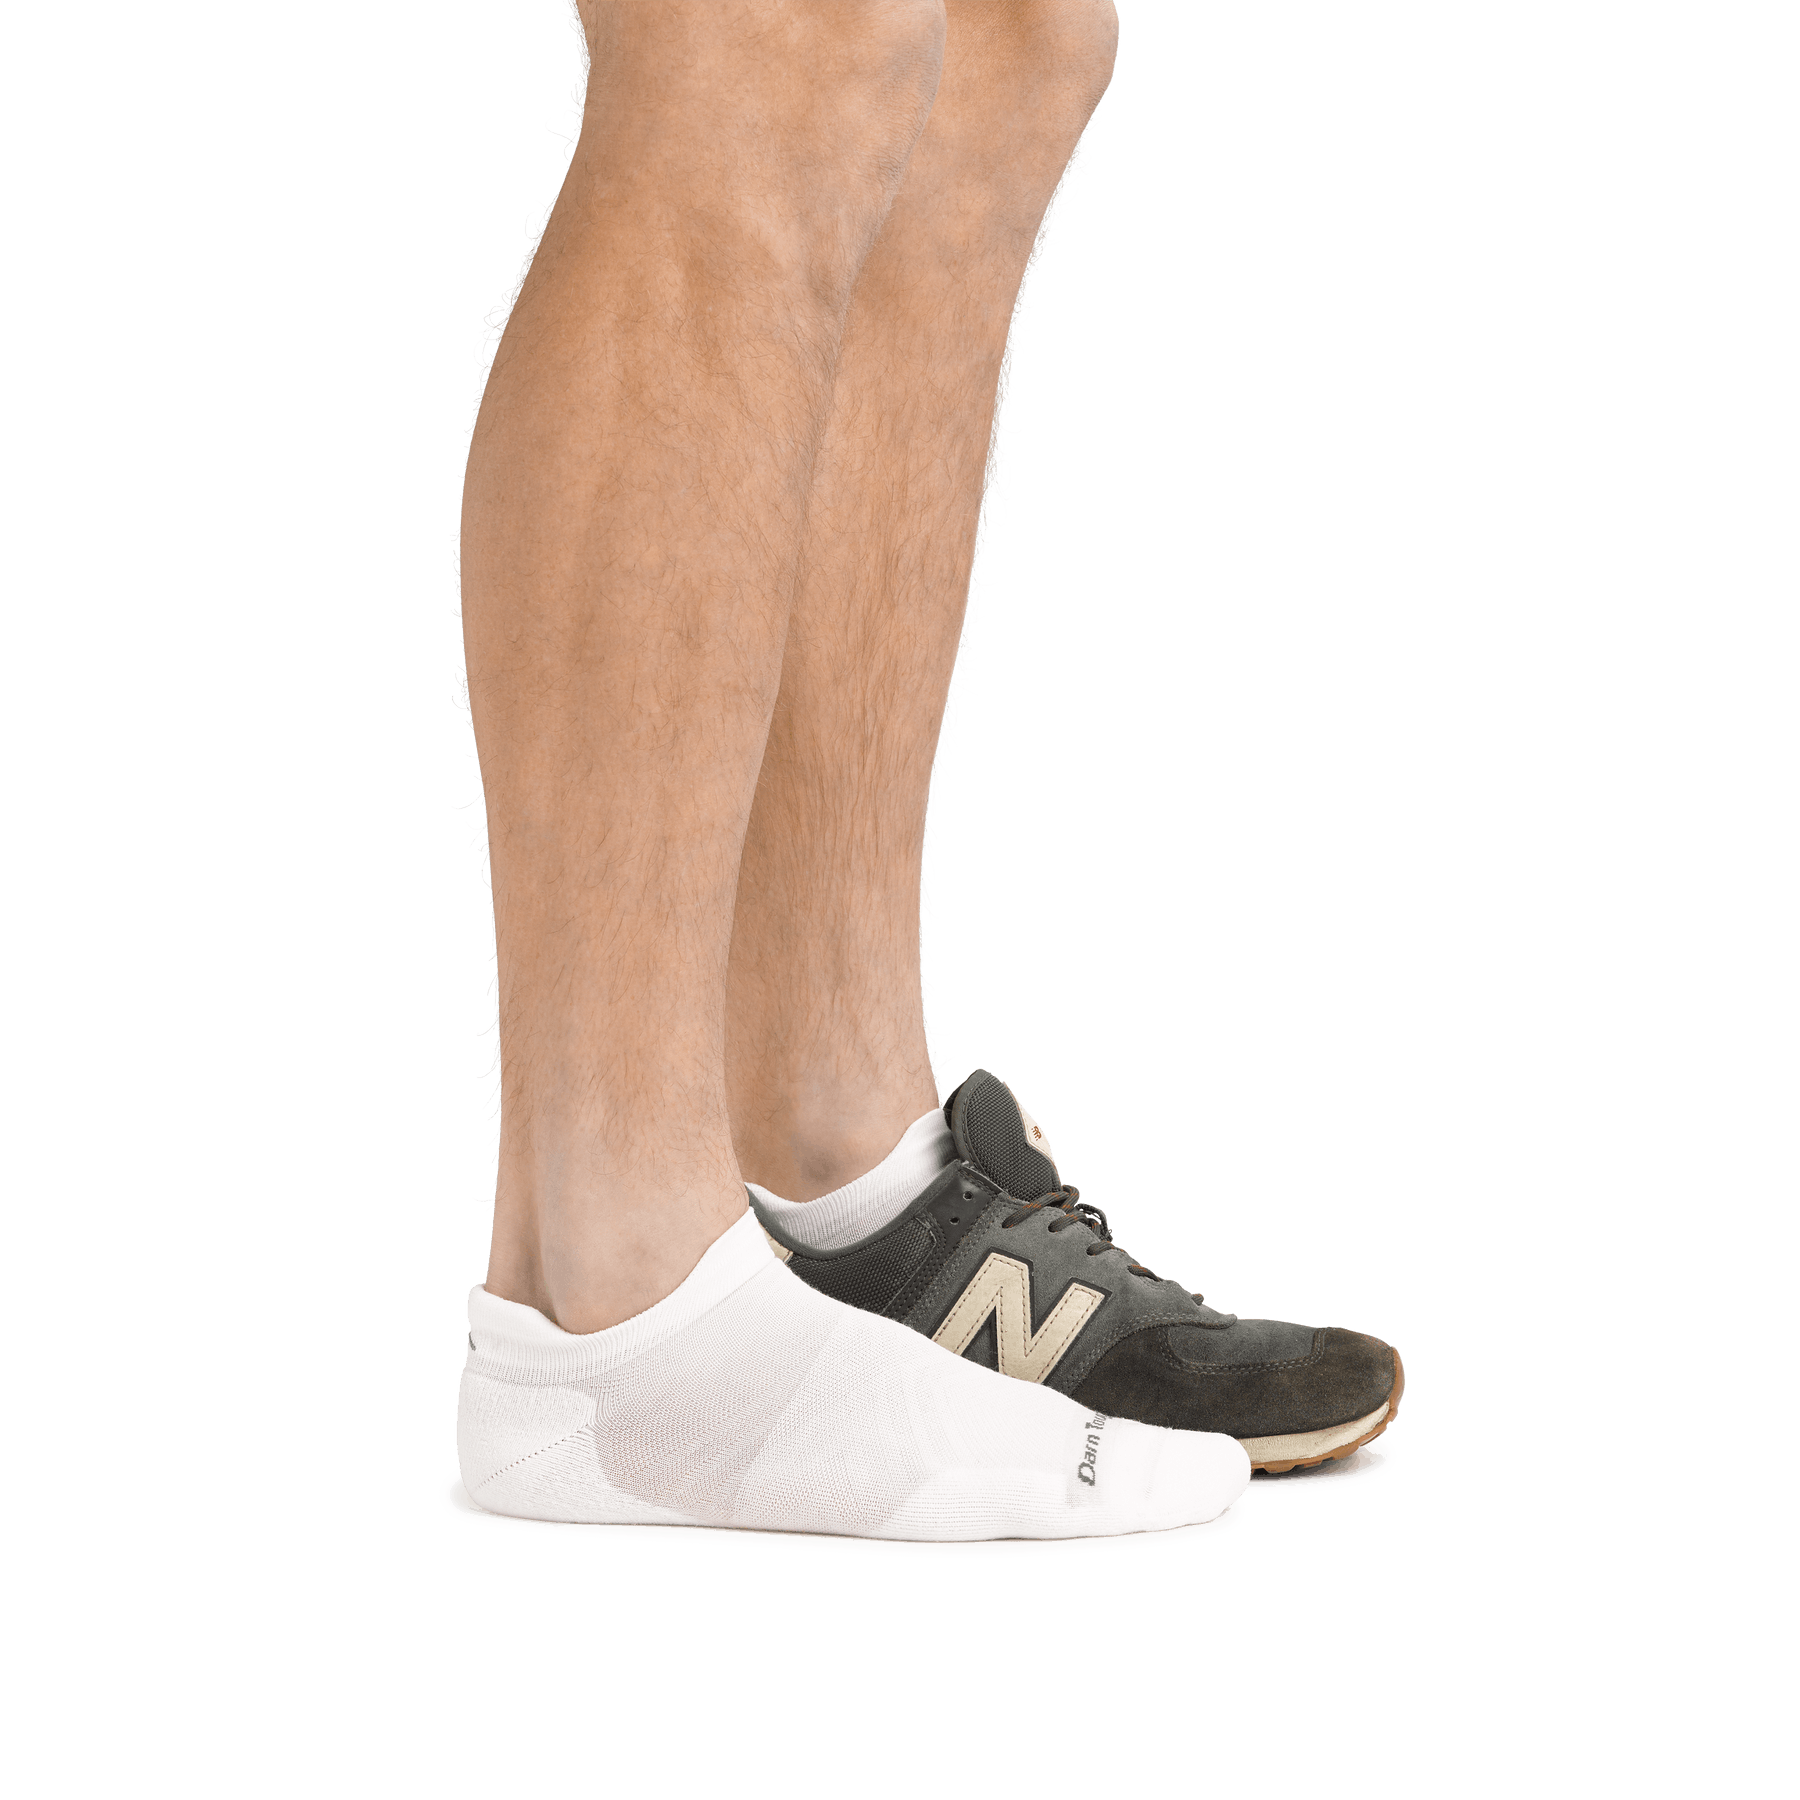 Darn Tough Men's Run No Show Tab Ultra-Lightweight Running Socks